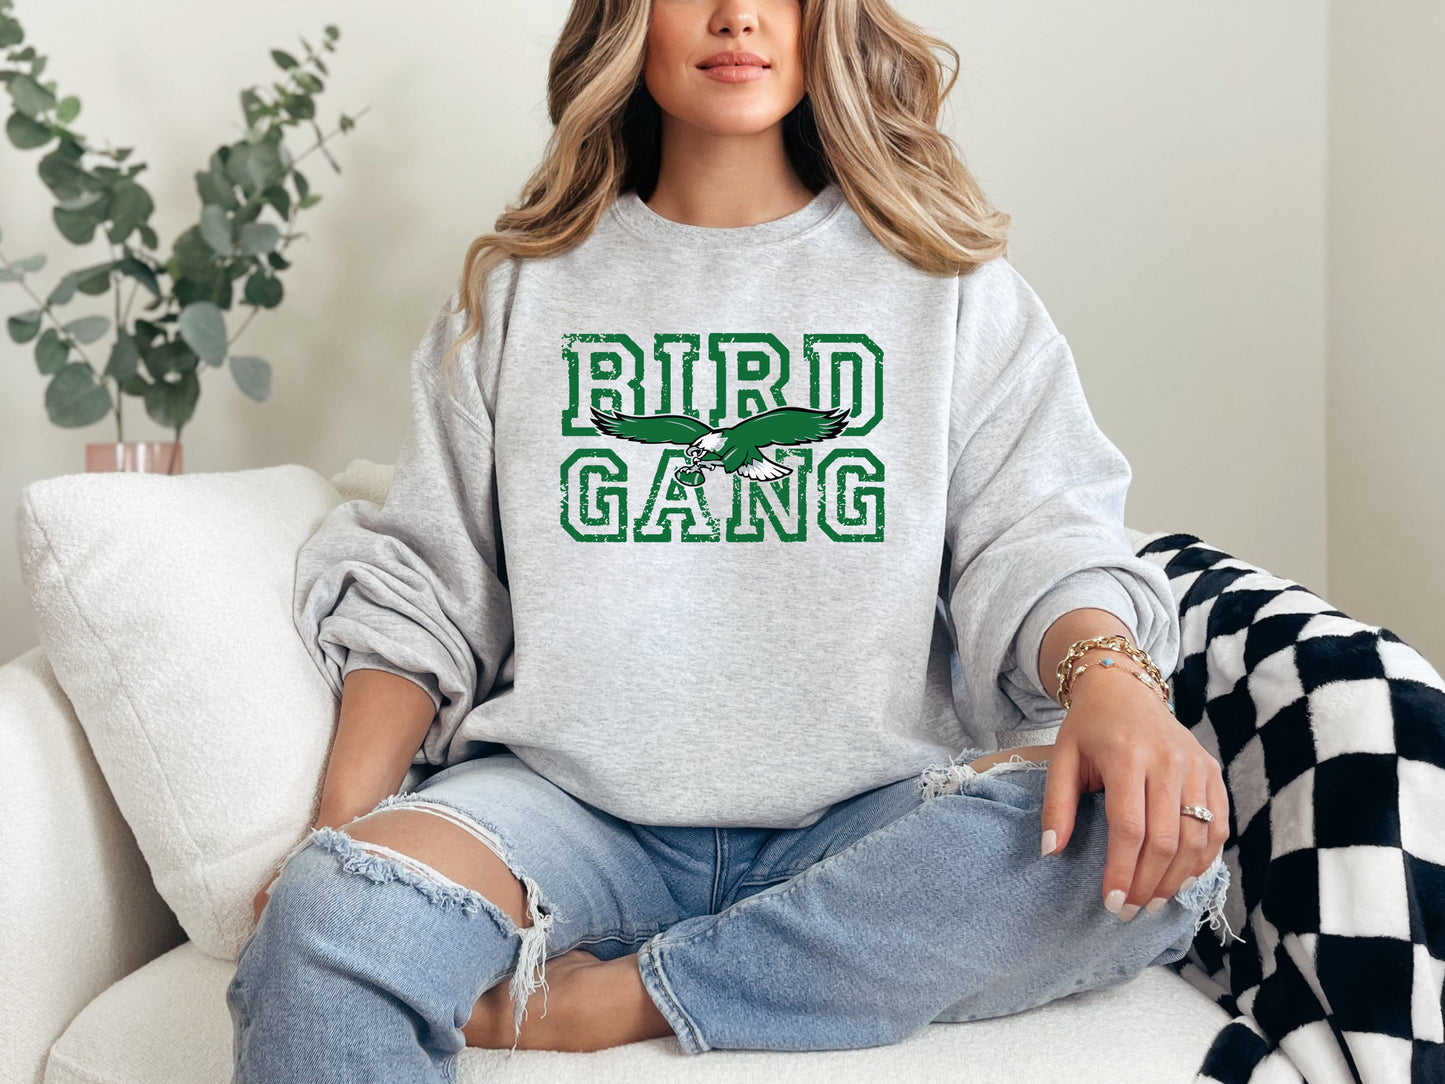 Philadelphia Eagles Bird Gang Womens Crewneck Sweatshirt *Bestseller*